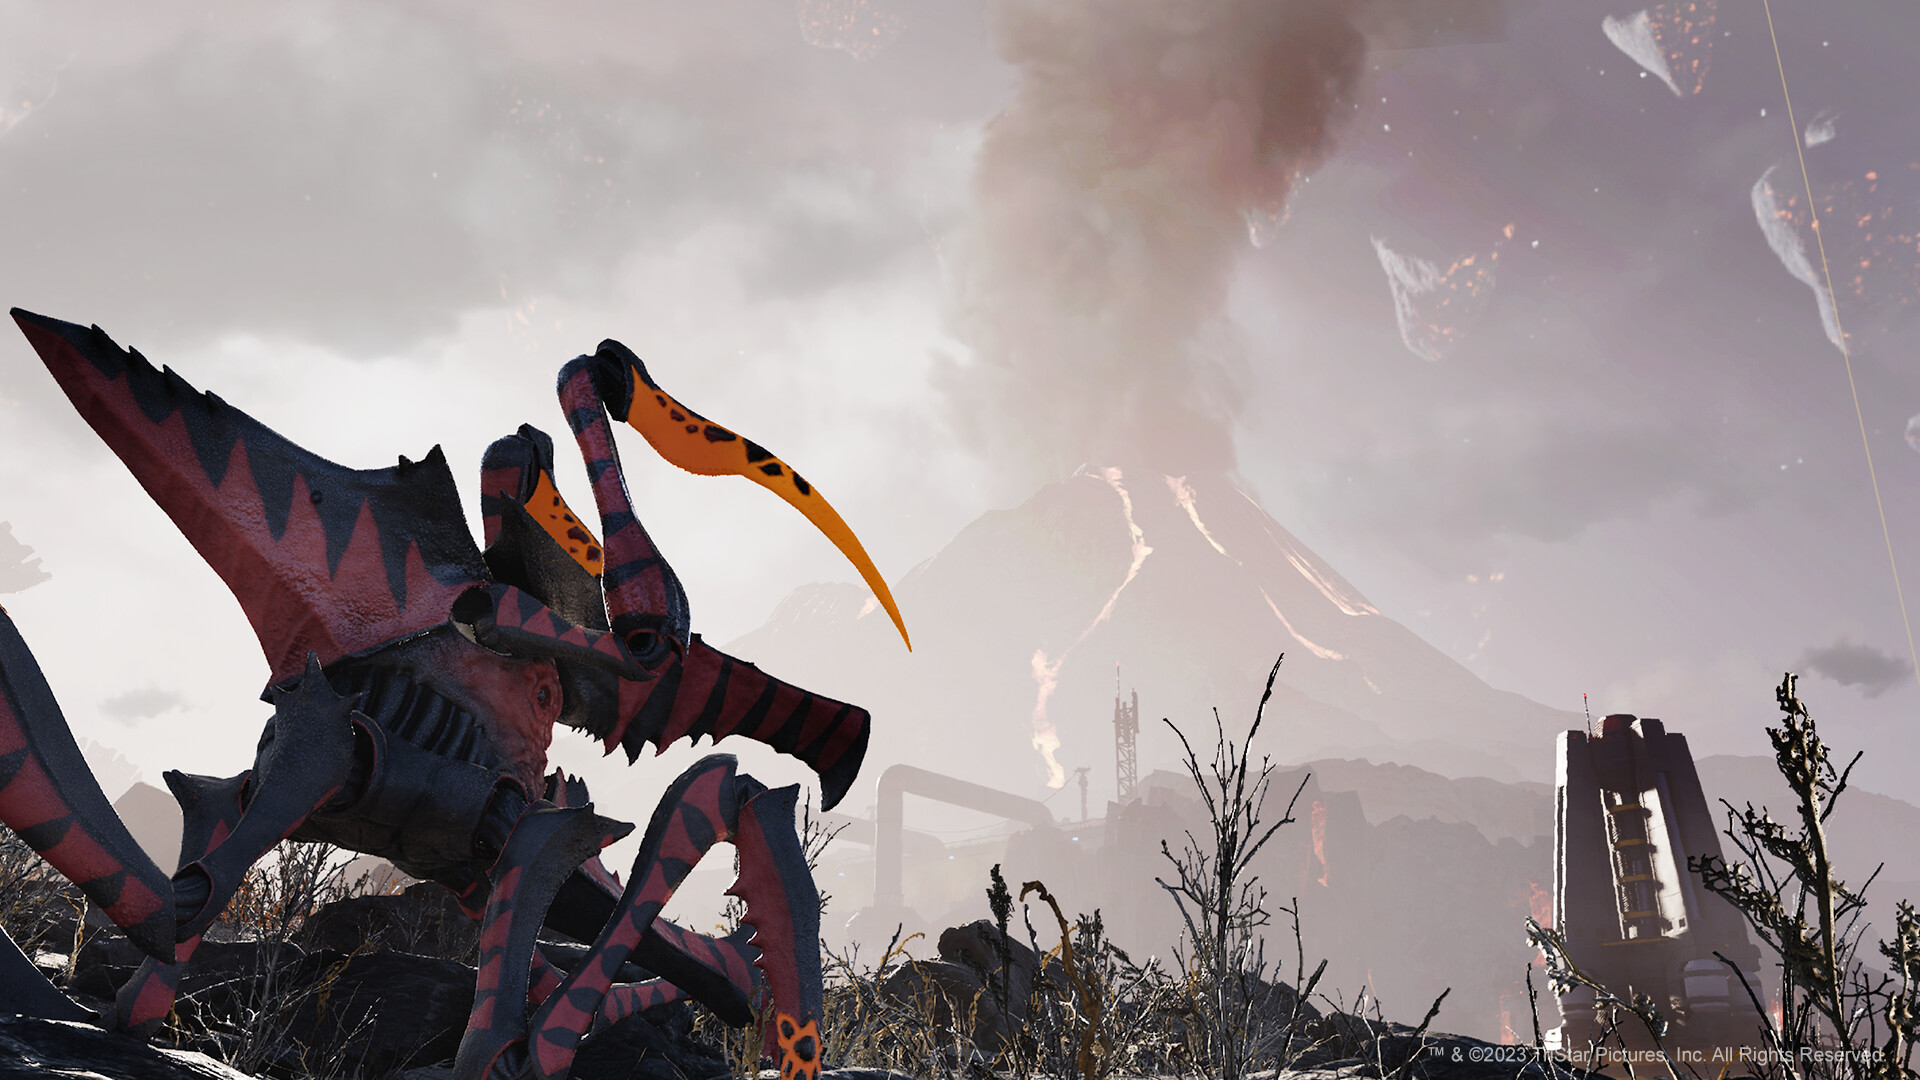 Horizon Zero Dawn returns to Steam charts, while Lethal Company